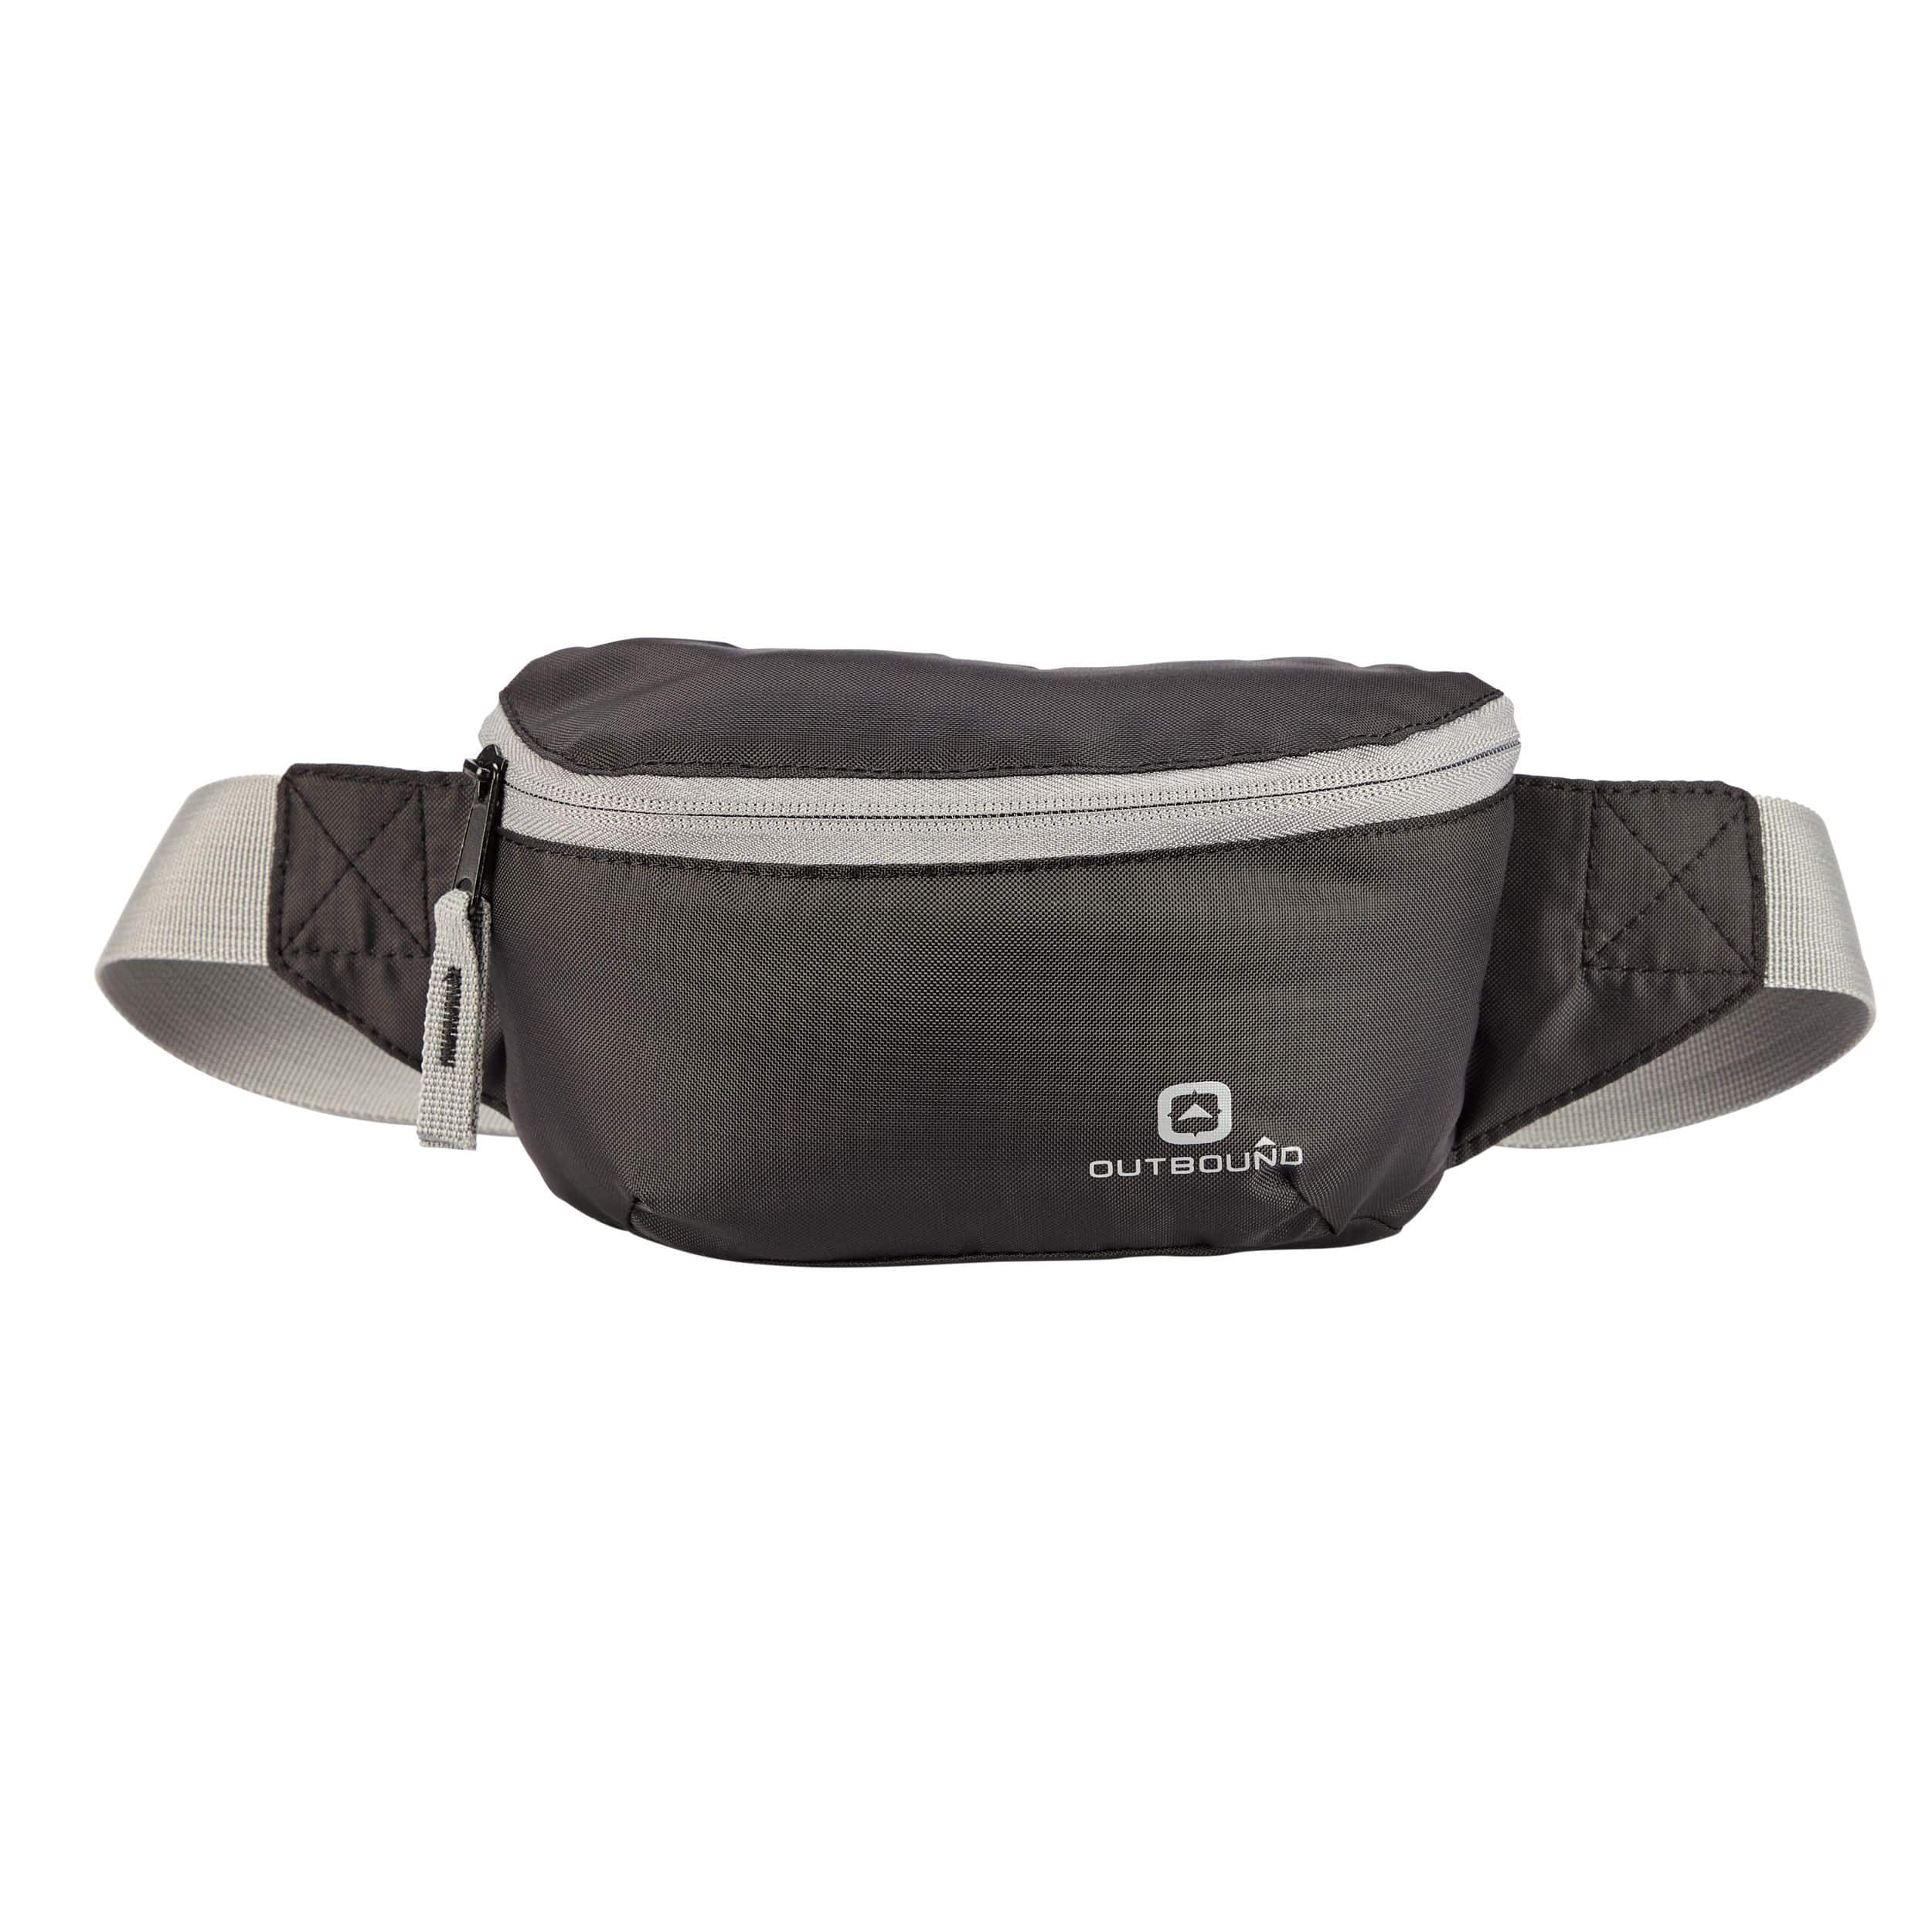 Outbound Hip & Crossbody Fanny Pack/Waist Bag w/ Adjustable Belt